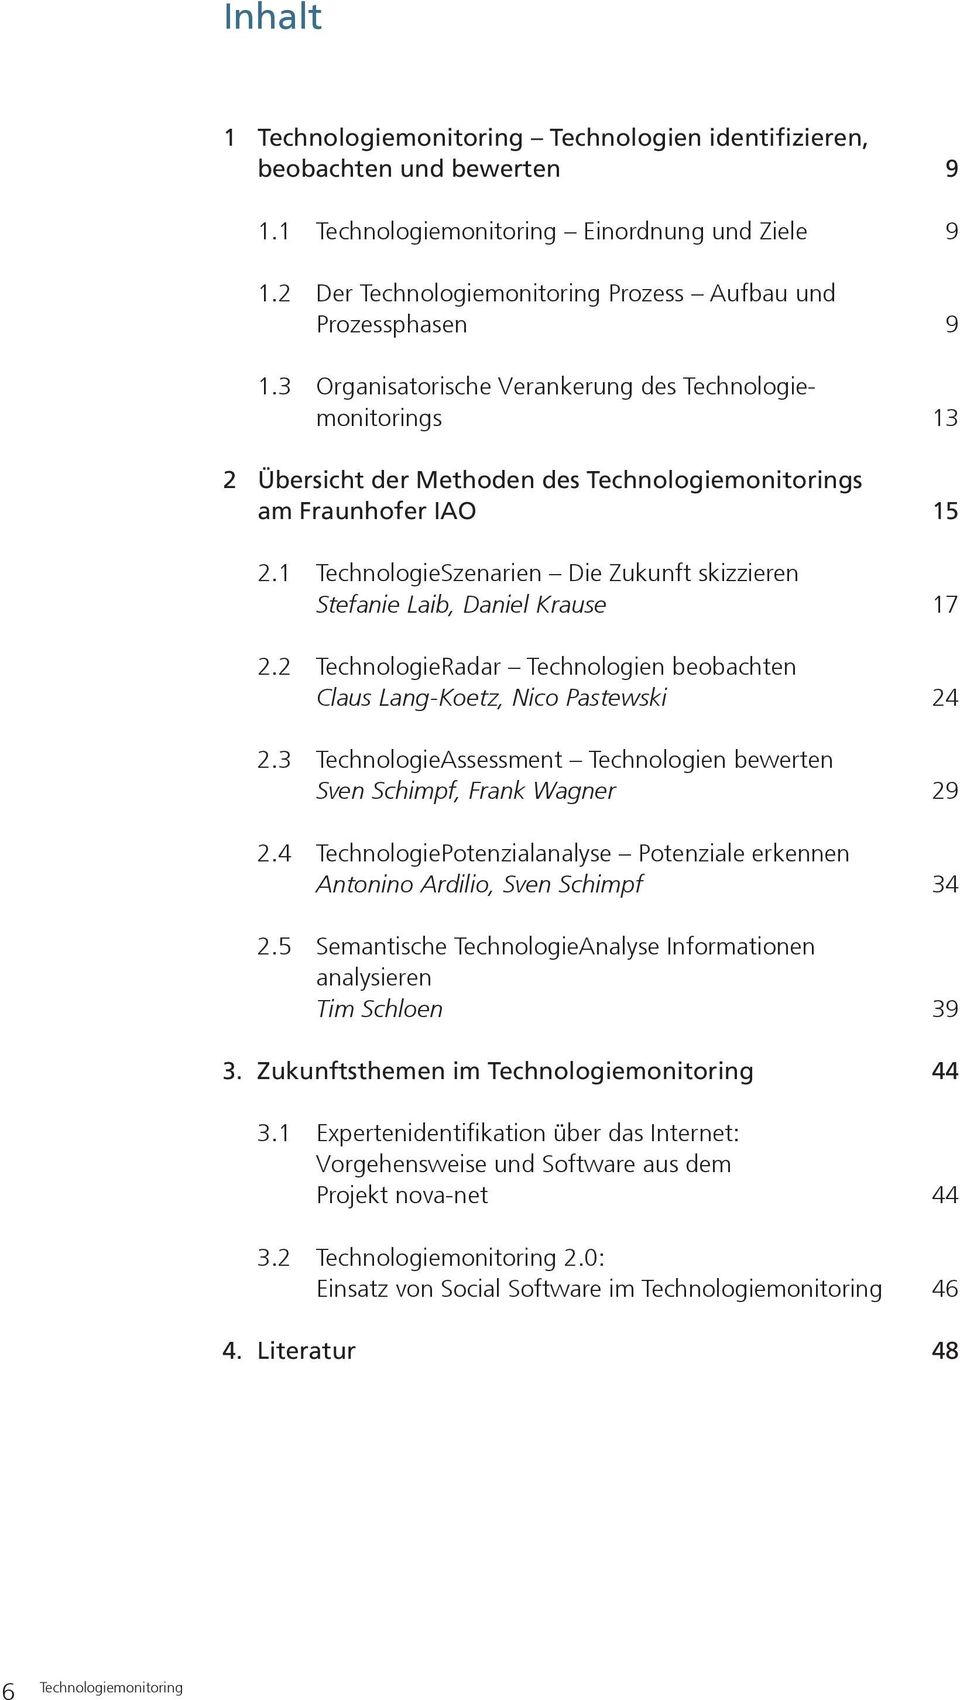 2 TechnologieRadar Technologien beobachten Claus Lang-Koetz, Nico Pastewski 24 2.3 TechnologieAssessment Technologien bewerten Sven Schimpf, Frank Wagner 29 2.